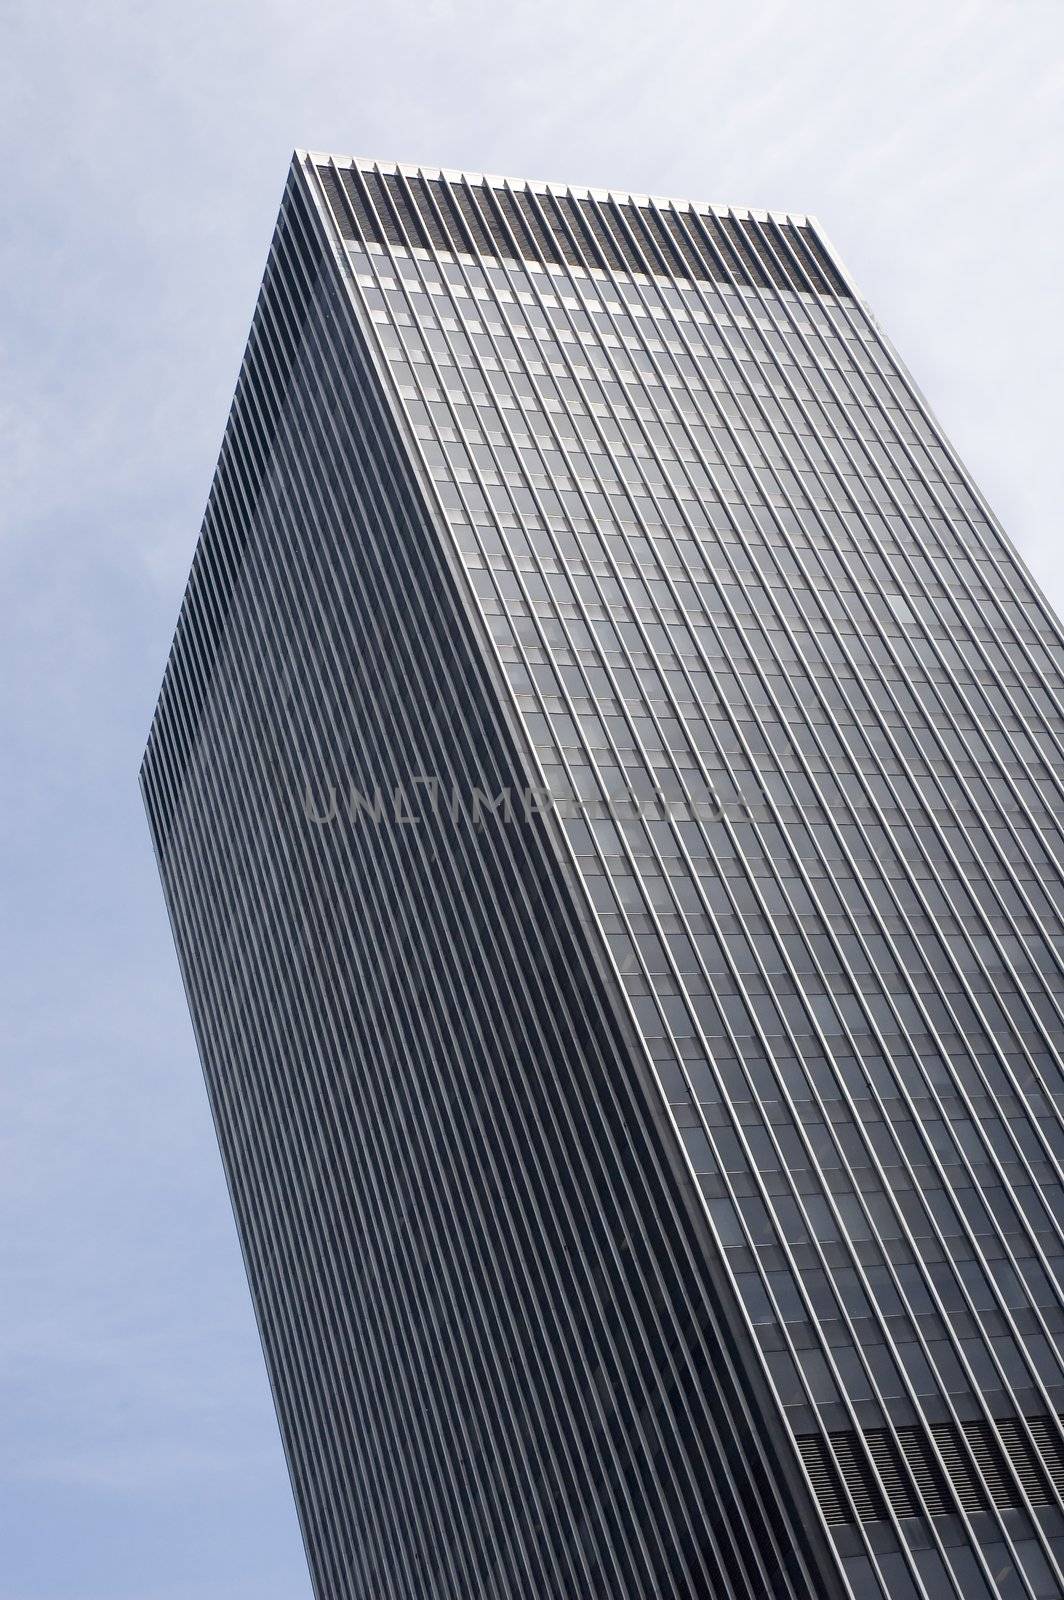 Skyscraper by vladikpod